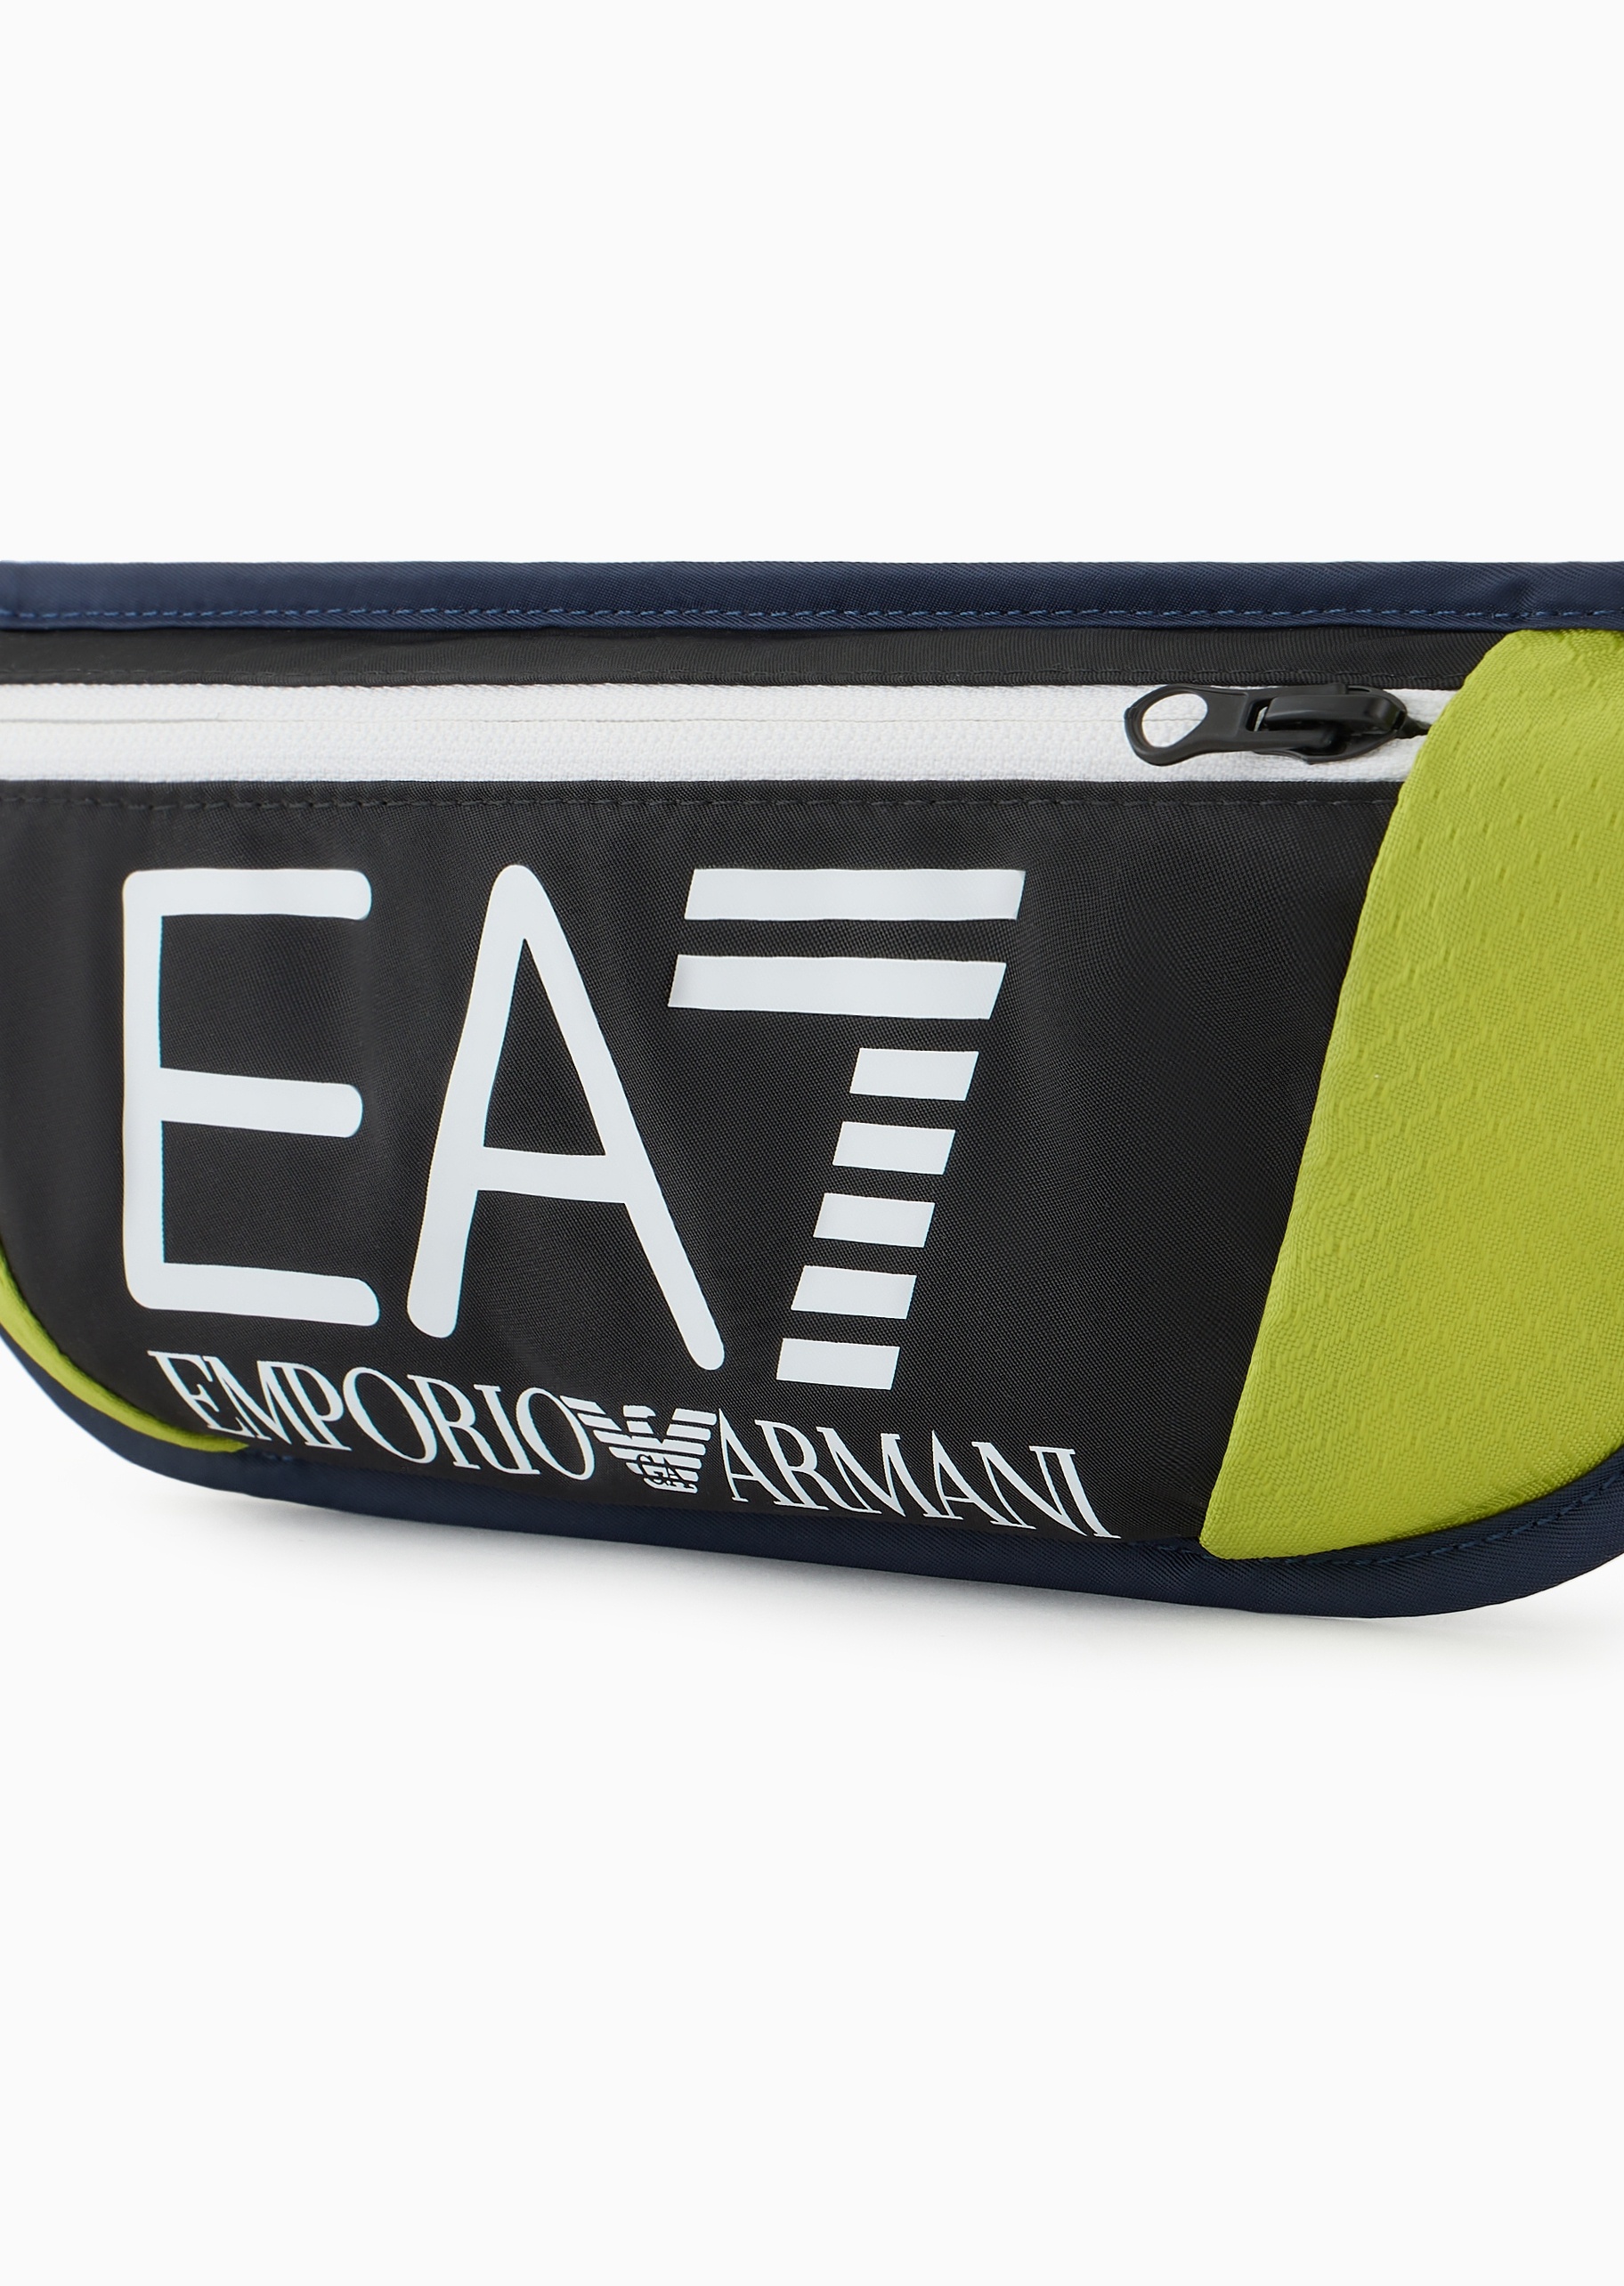 EA7 男士拉链可调节插扣袢带印花健身训练腰包